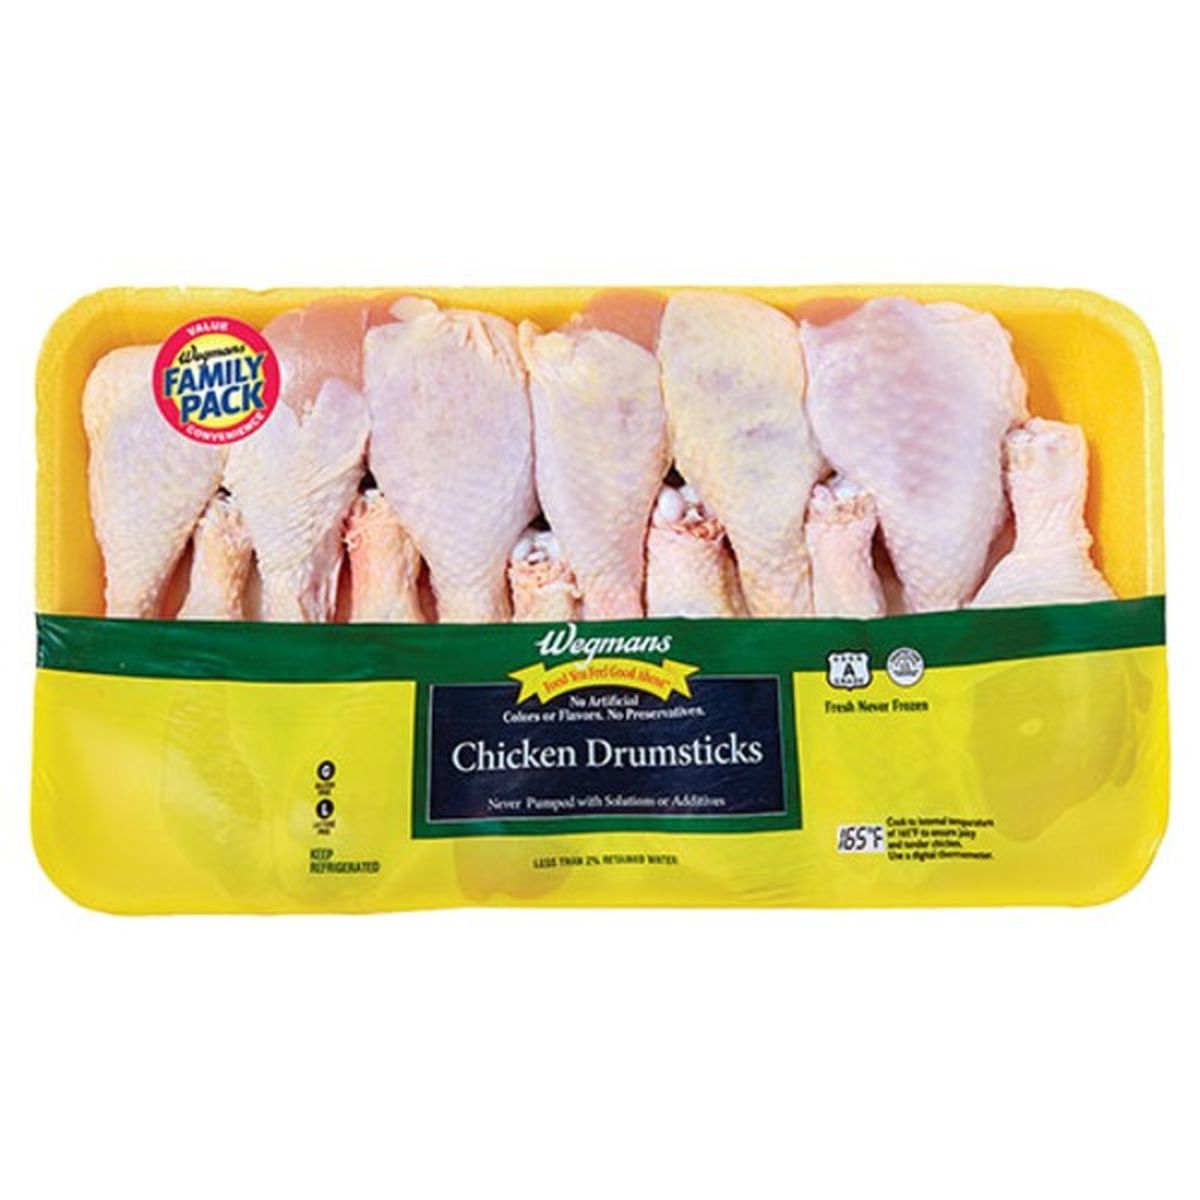 Calories in Wegmans Chicken Drumsticks, FAMILY PACK